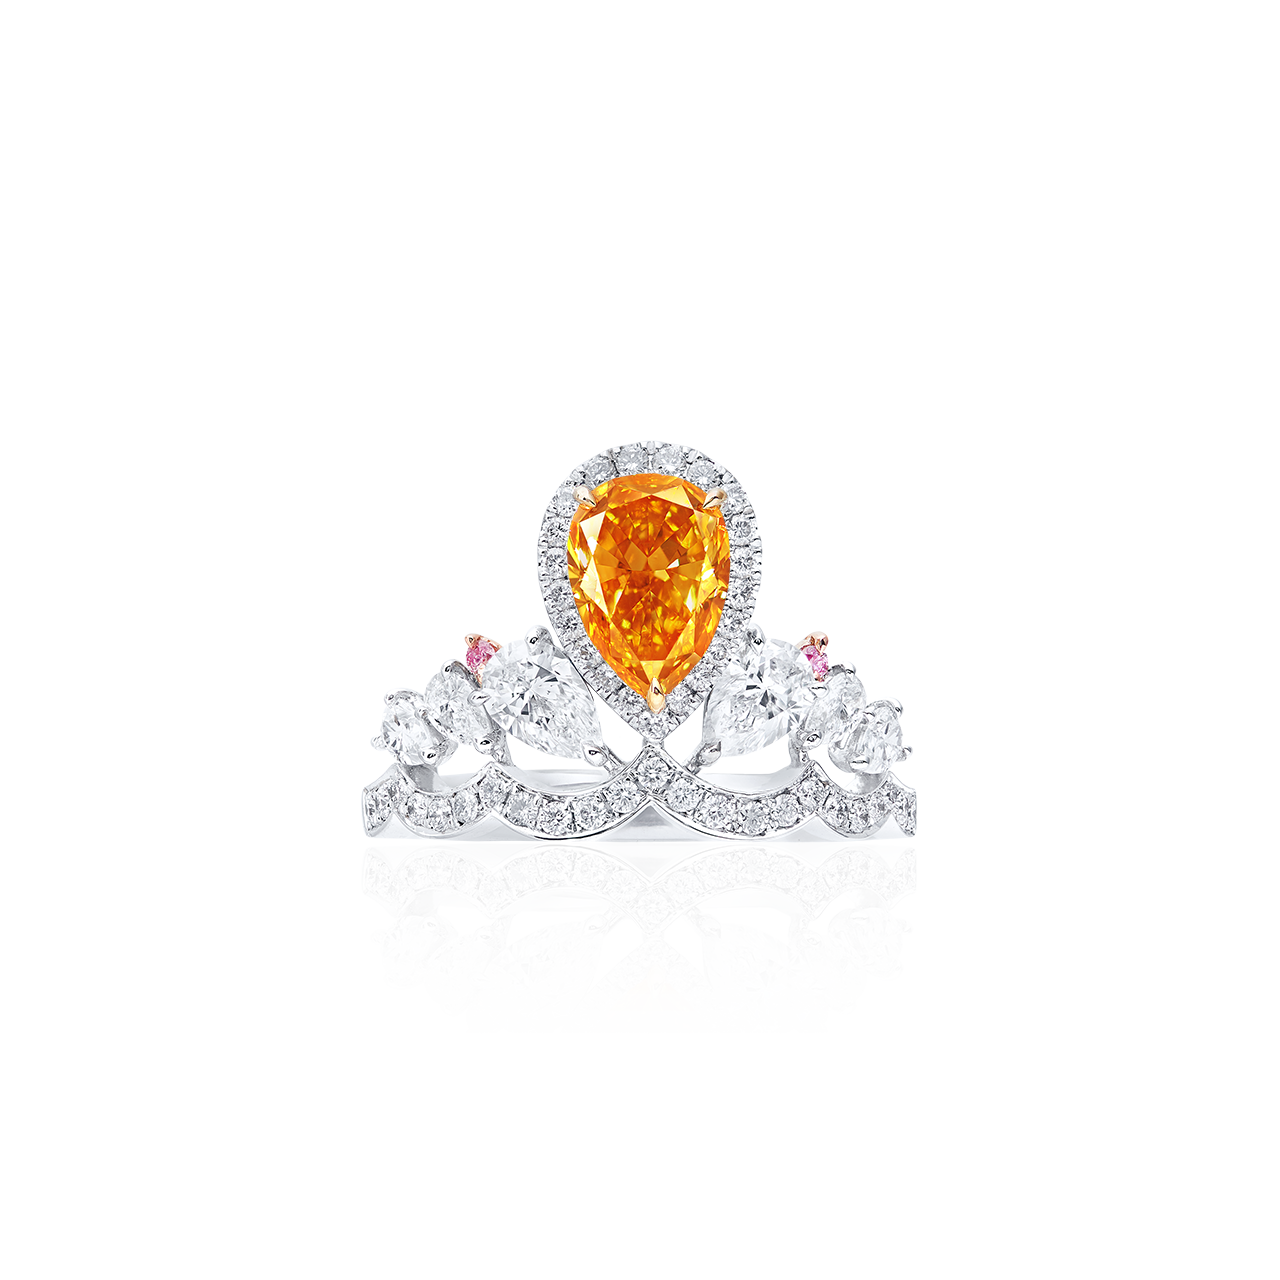 GIA 1.08克拉 艷彩黃橘鑽戒
Fancy Vivid Yellow -Orange Colored 
Diamond Ring